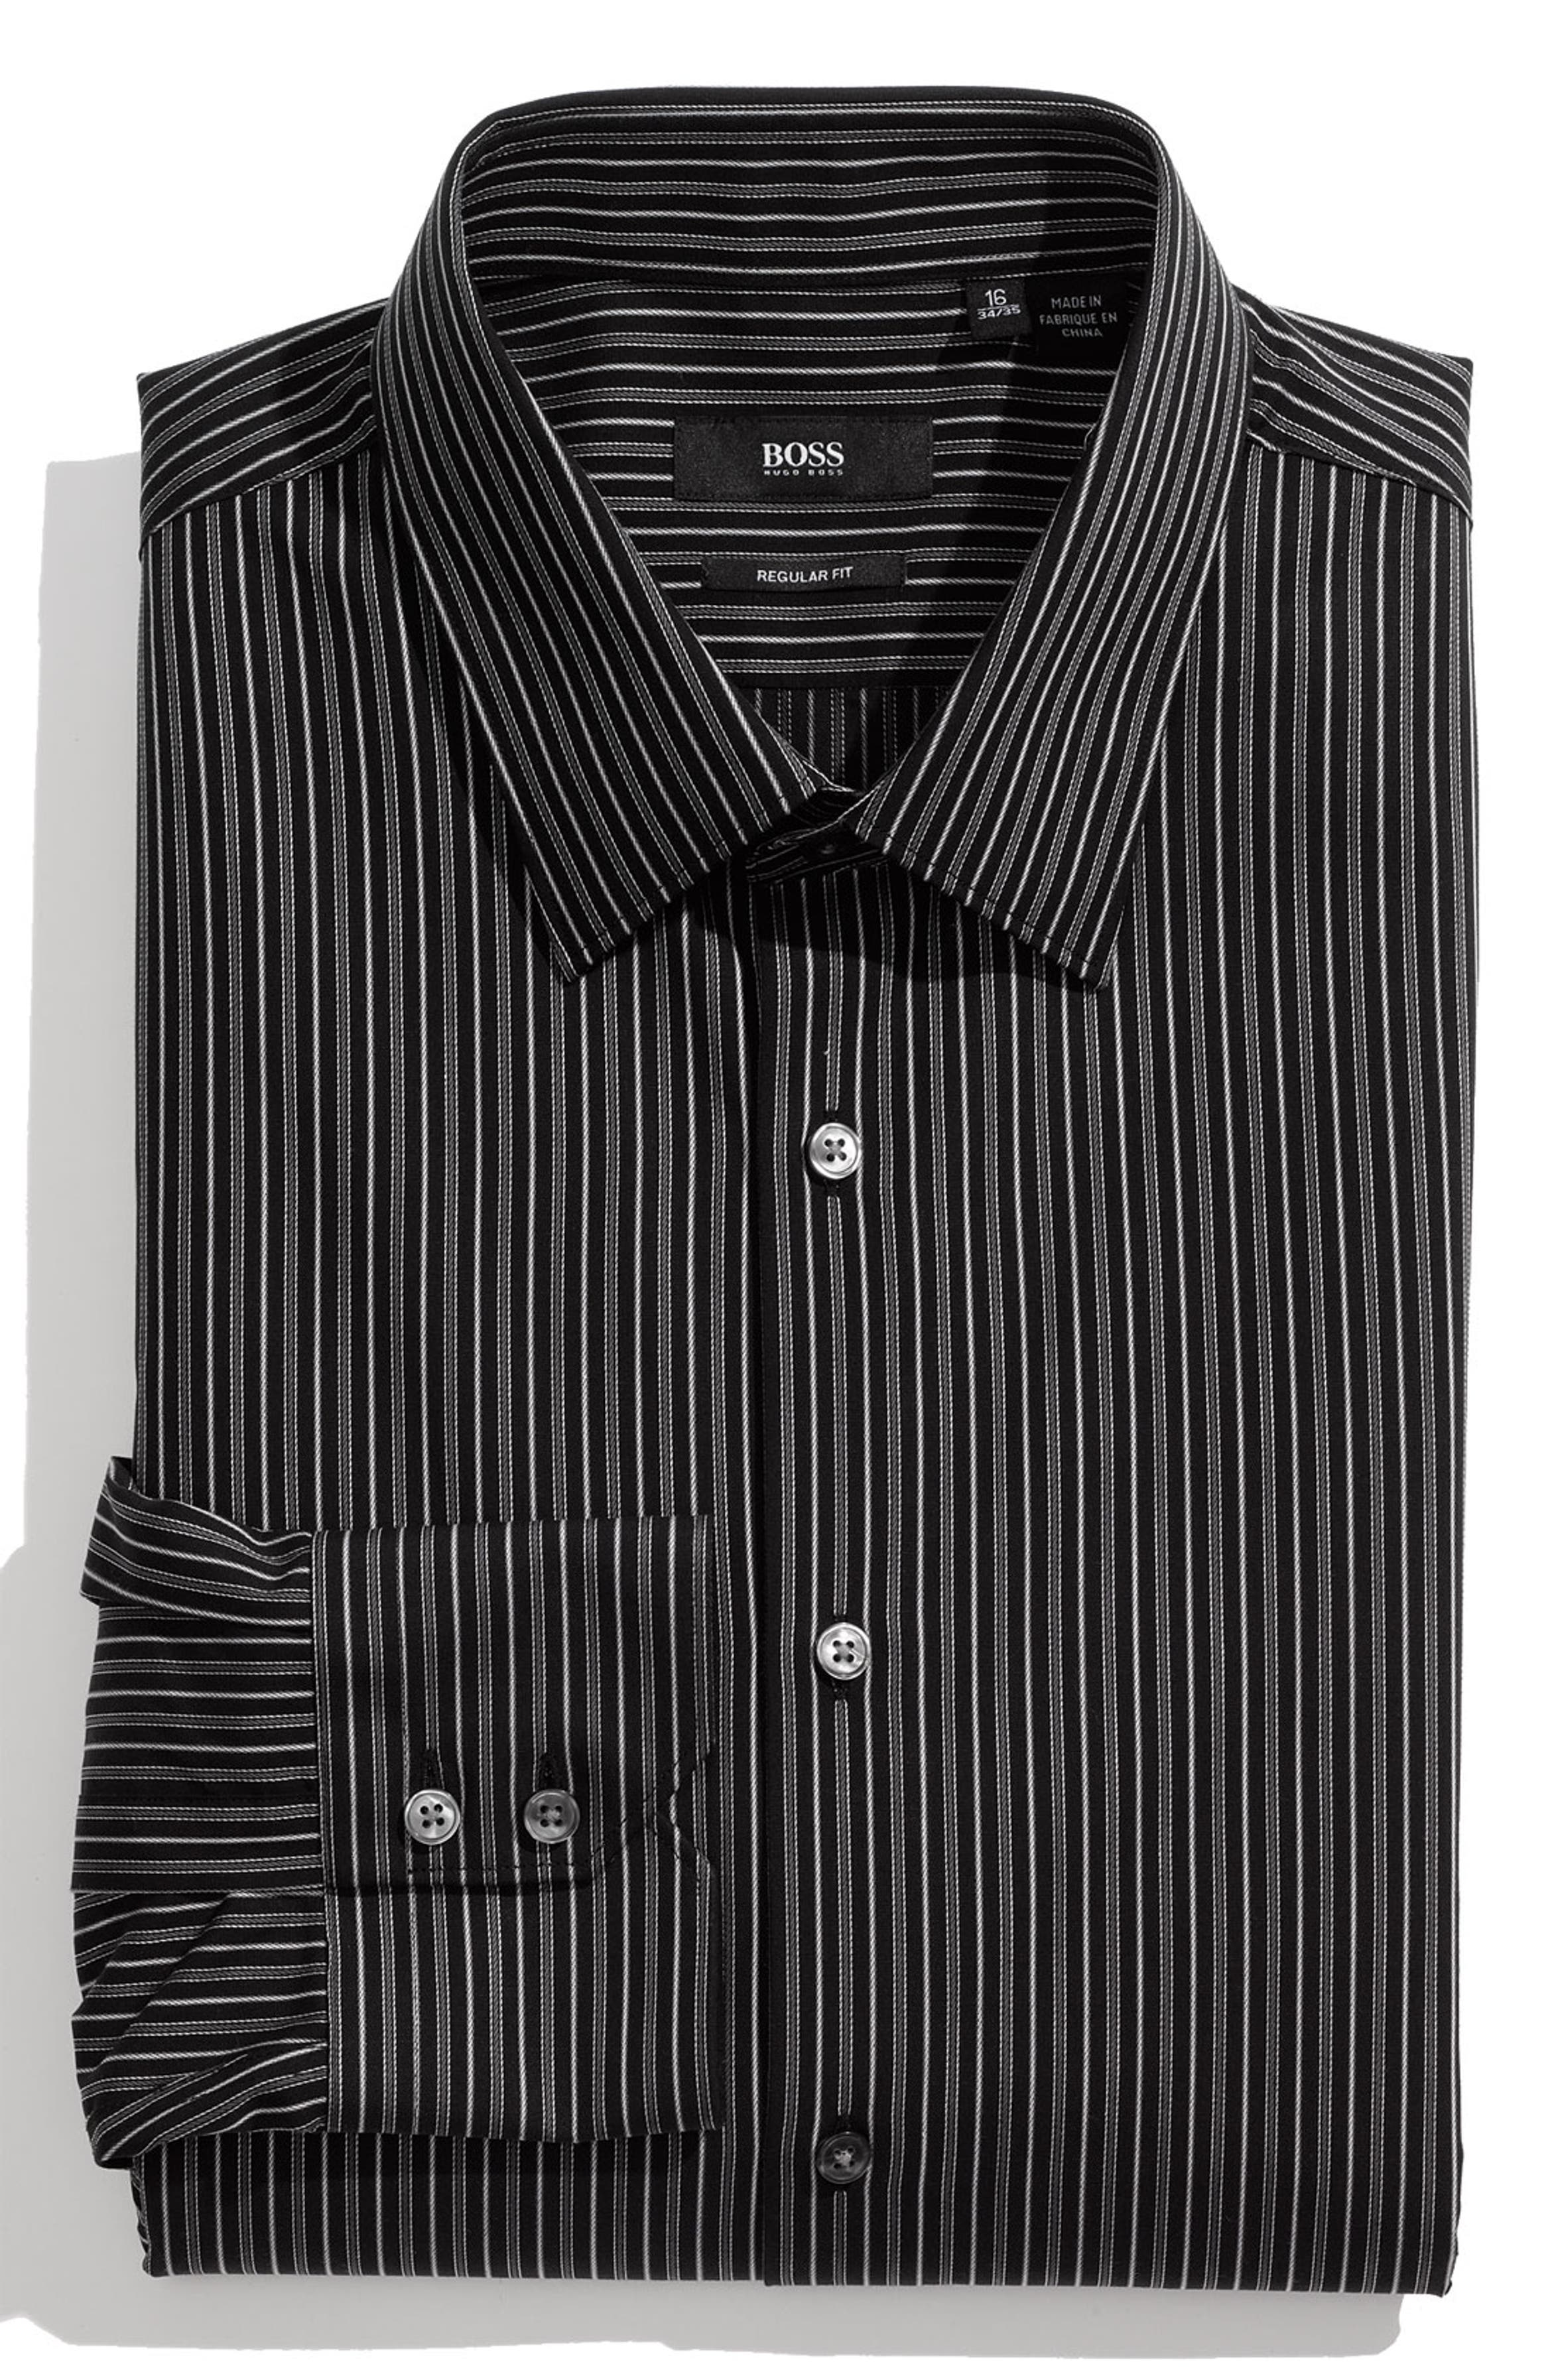 BOSS Black Regular Fit Dress Shirt | Nordstrom